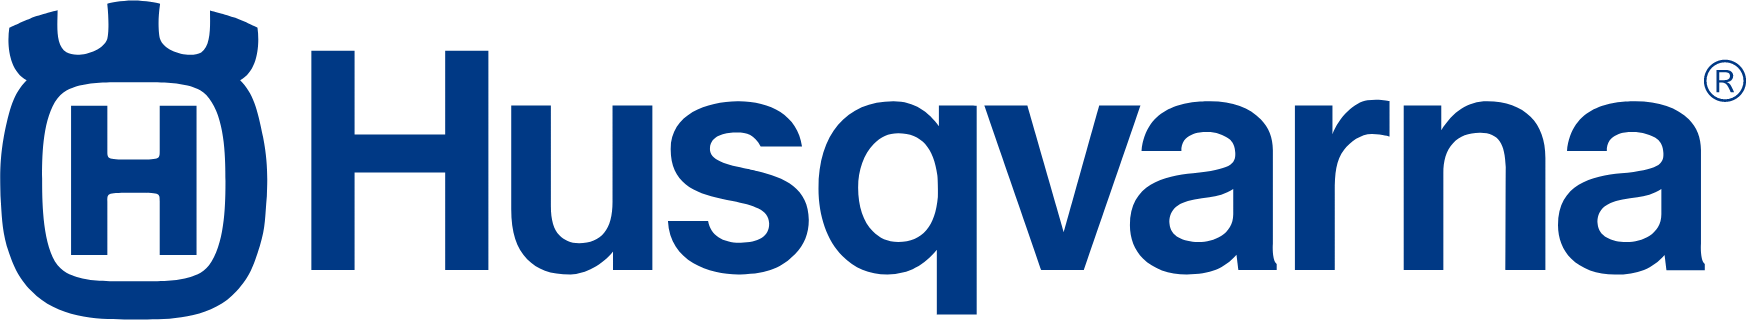 Husqvarna logo large (transparent PNG)